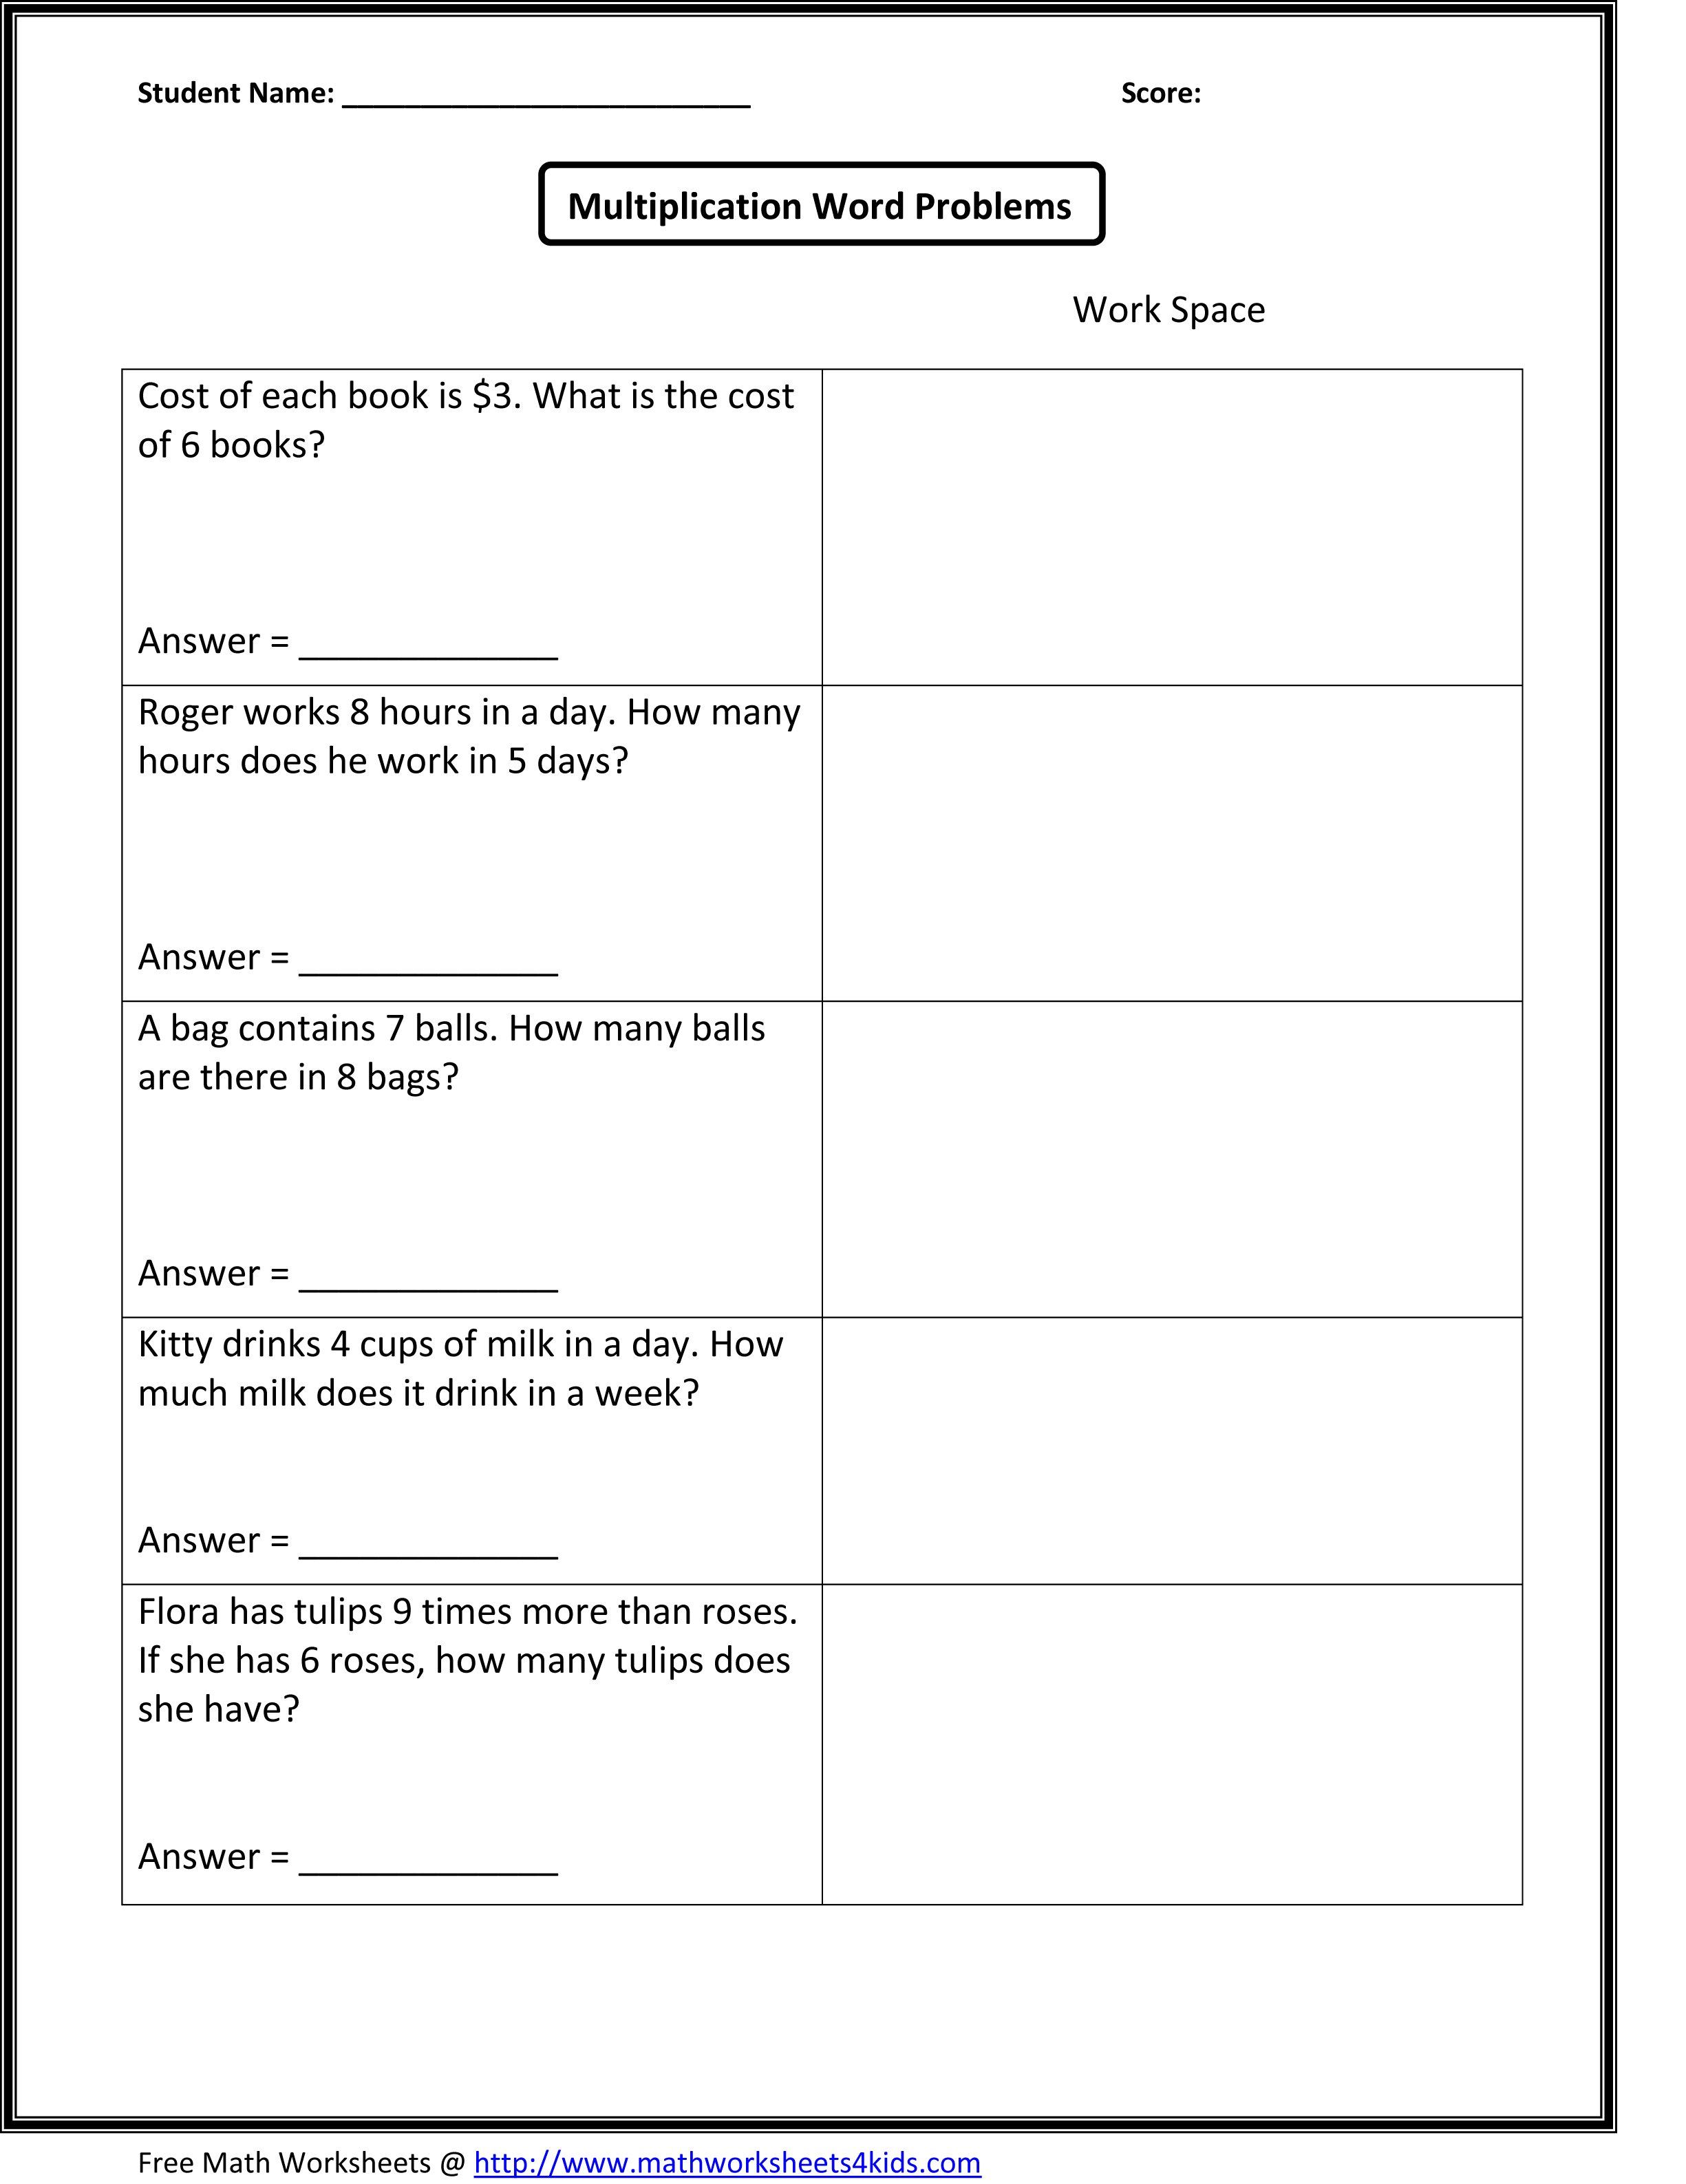 second-grade-math-worksheets